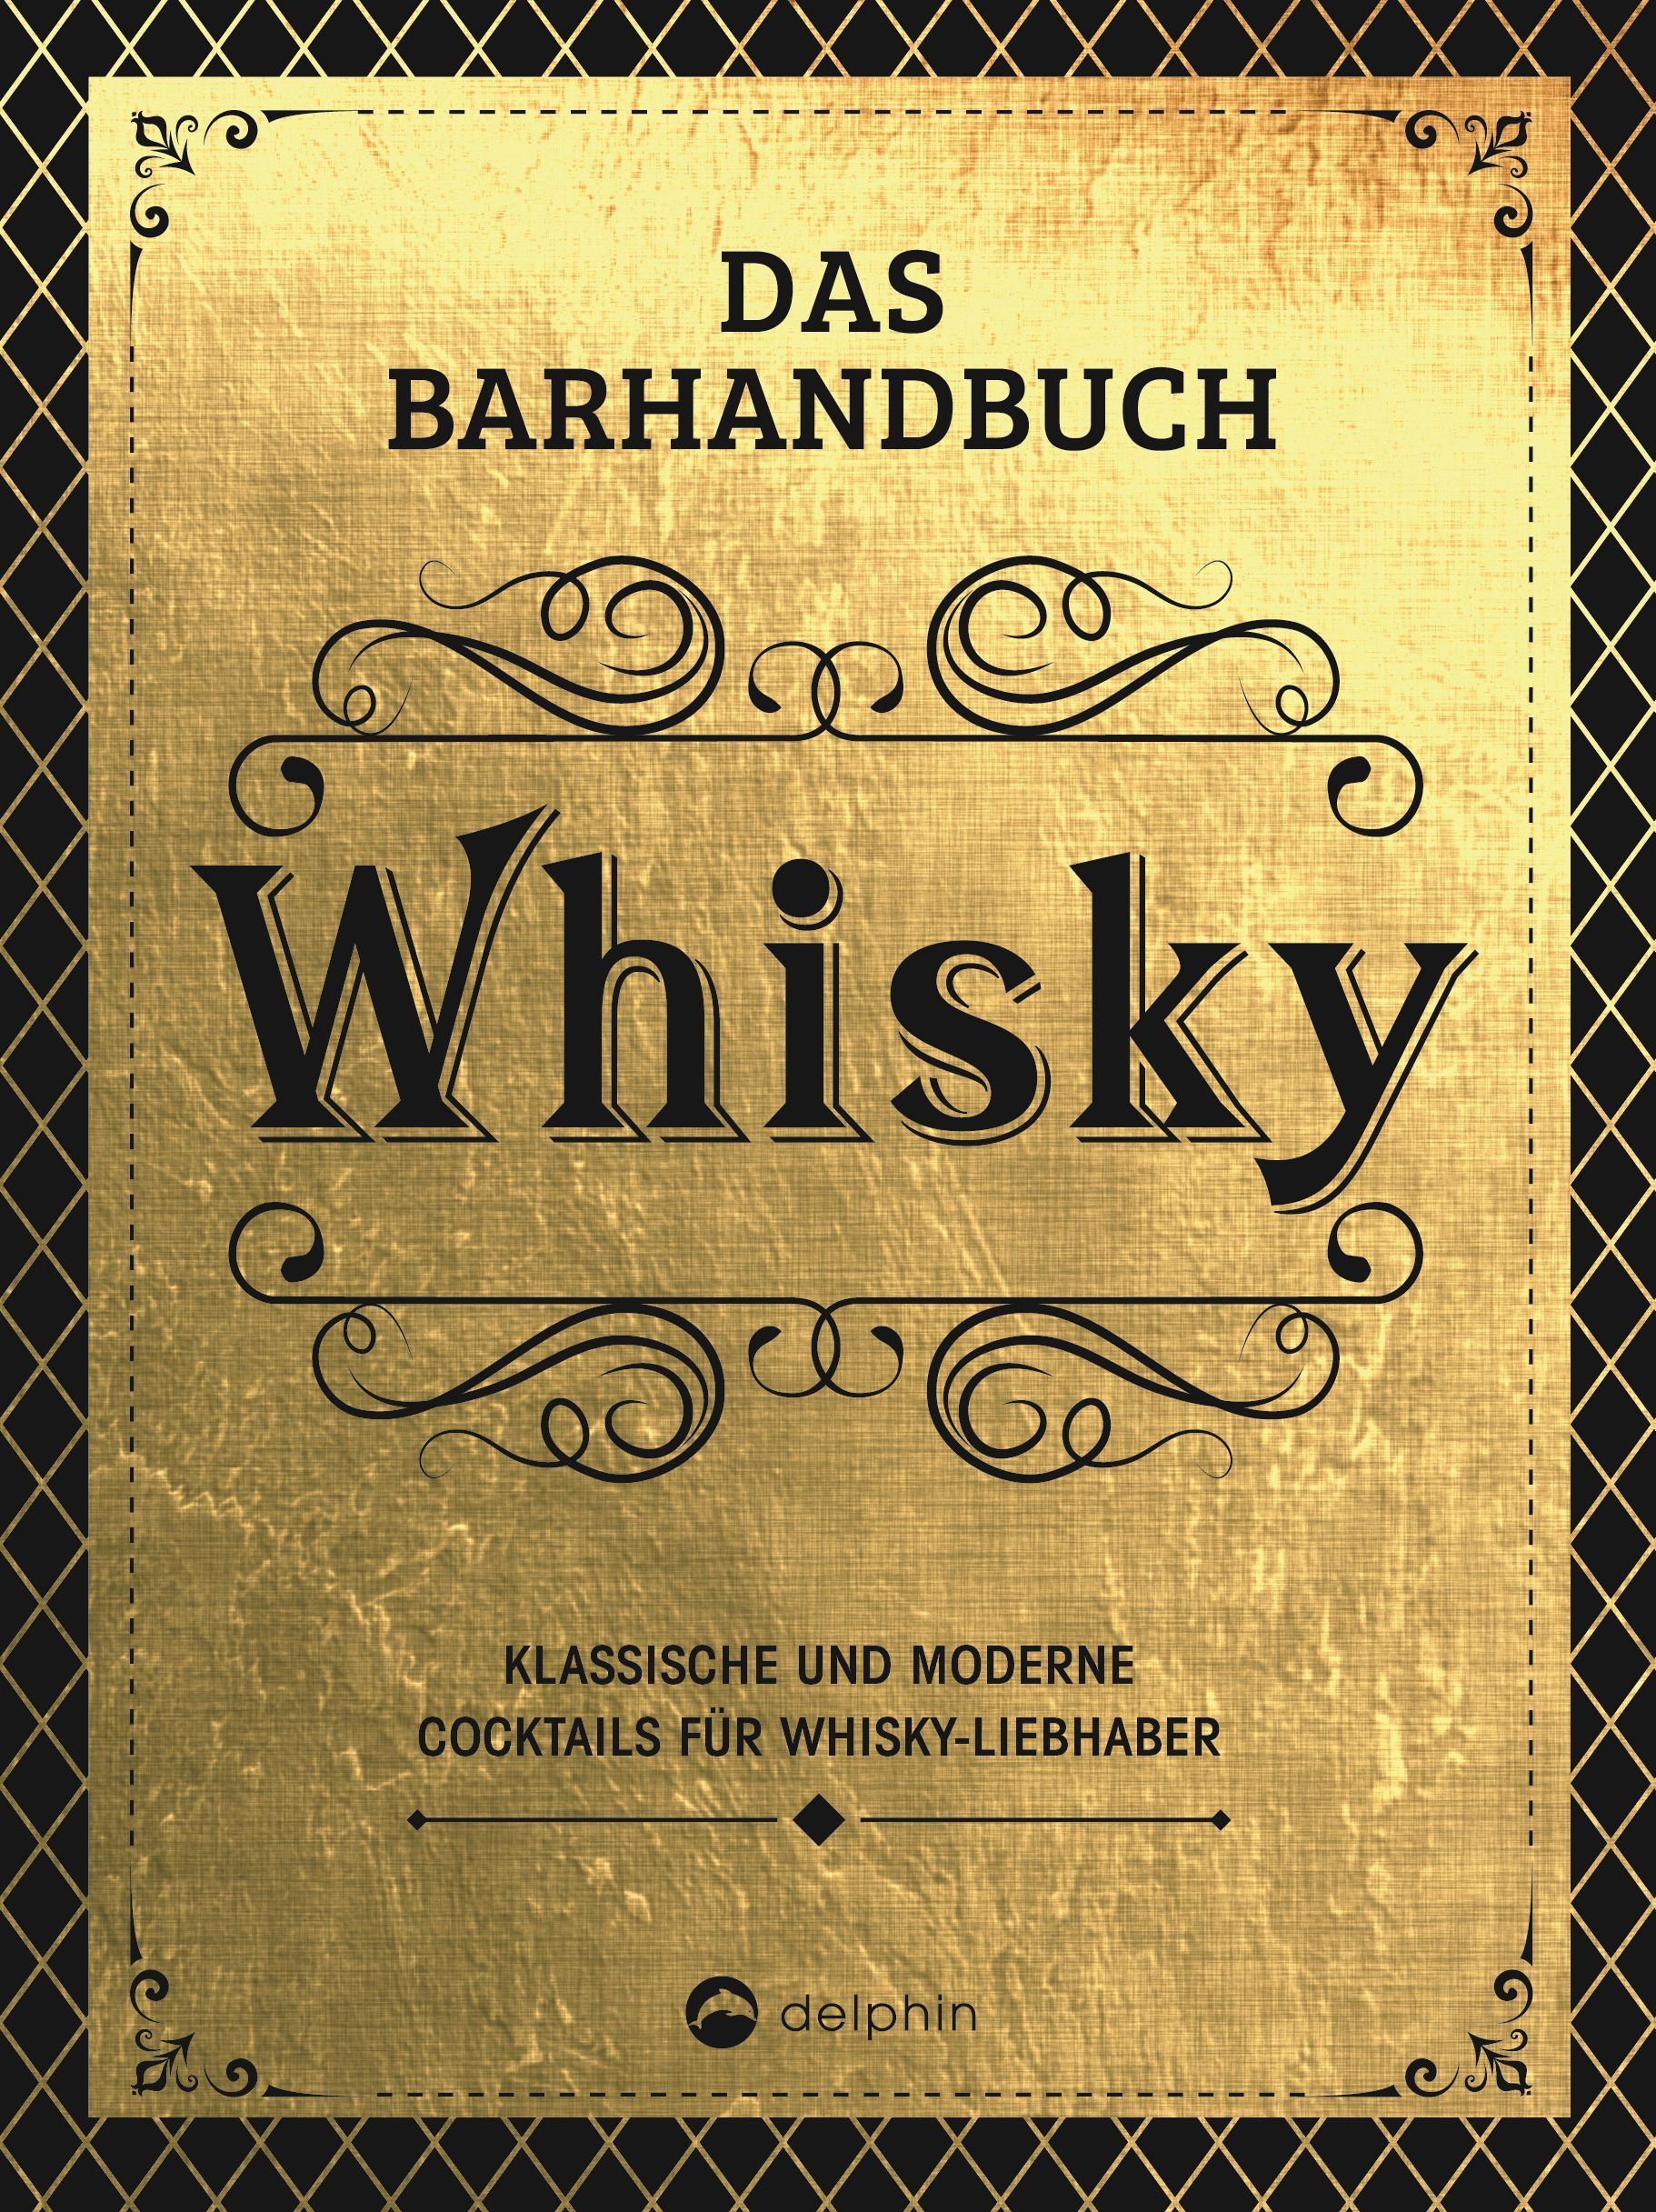 Das Barhandbuch Whisky